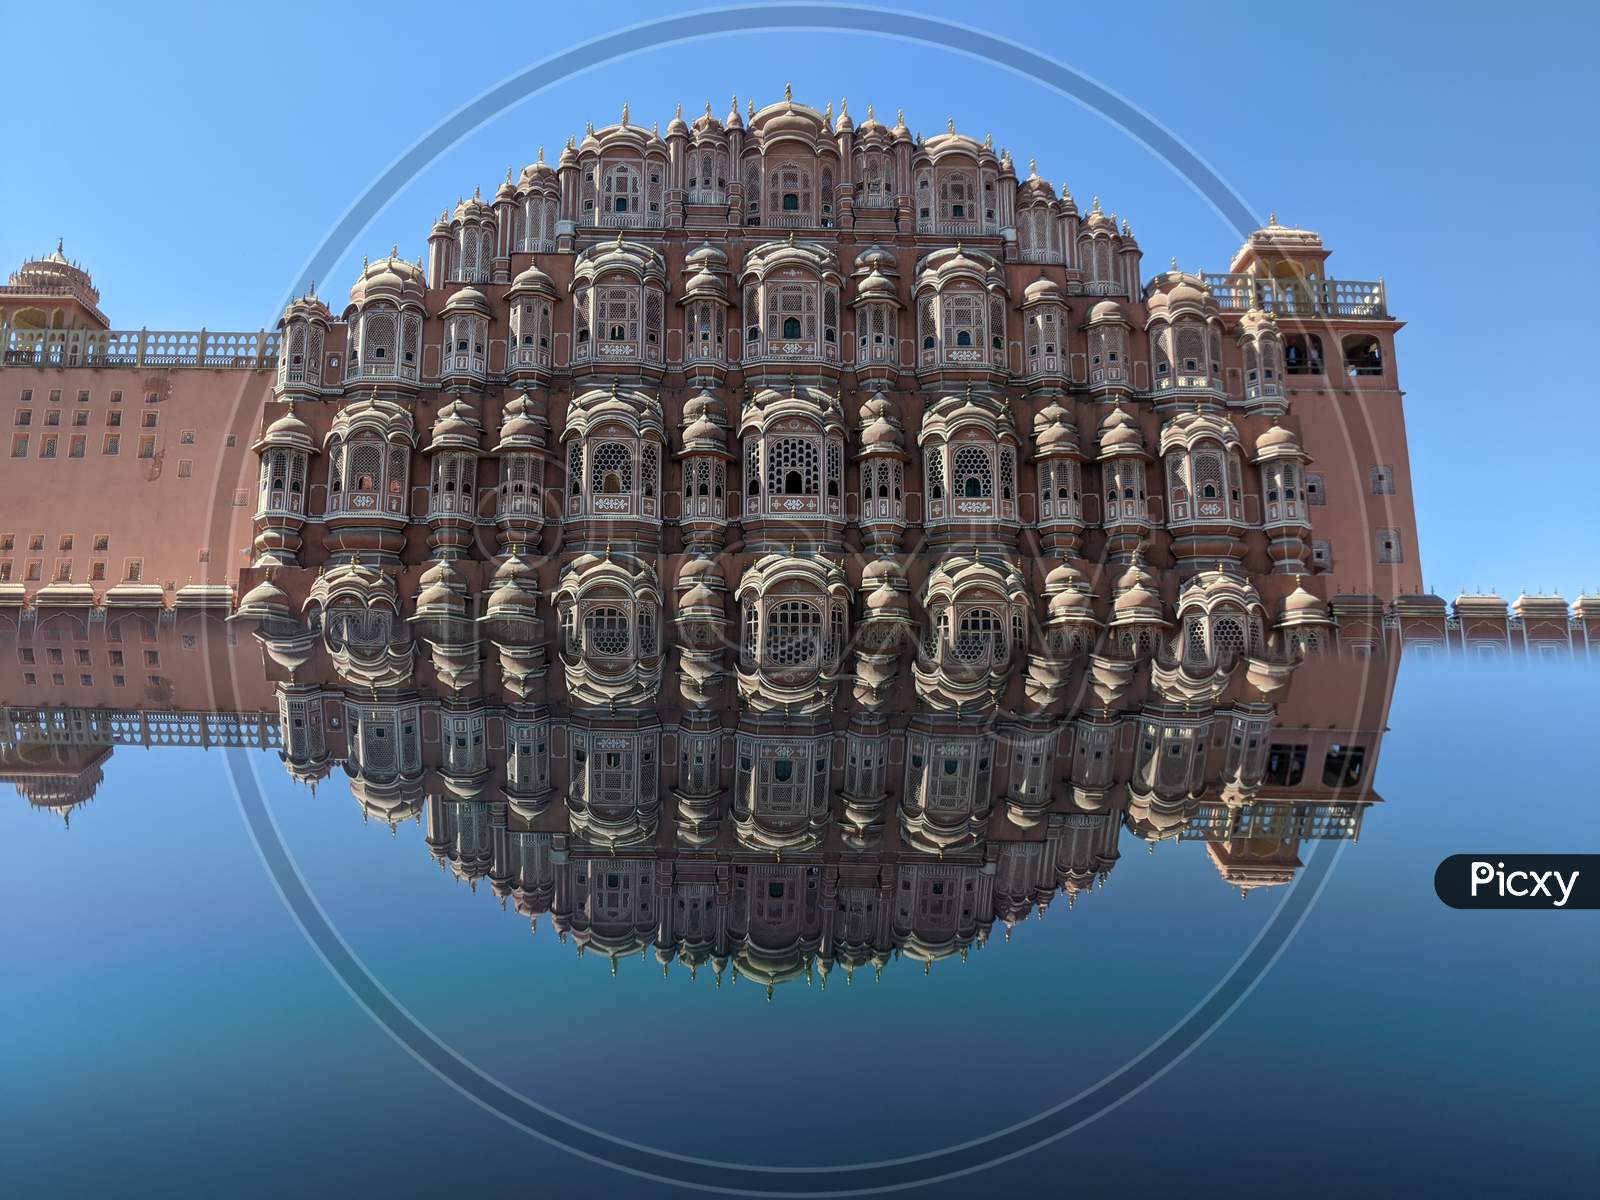 Hawamahal , Wind Palace Jaipur